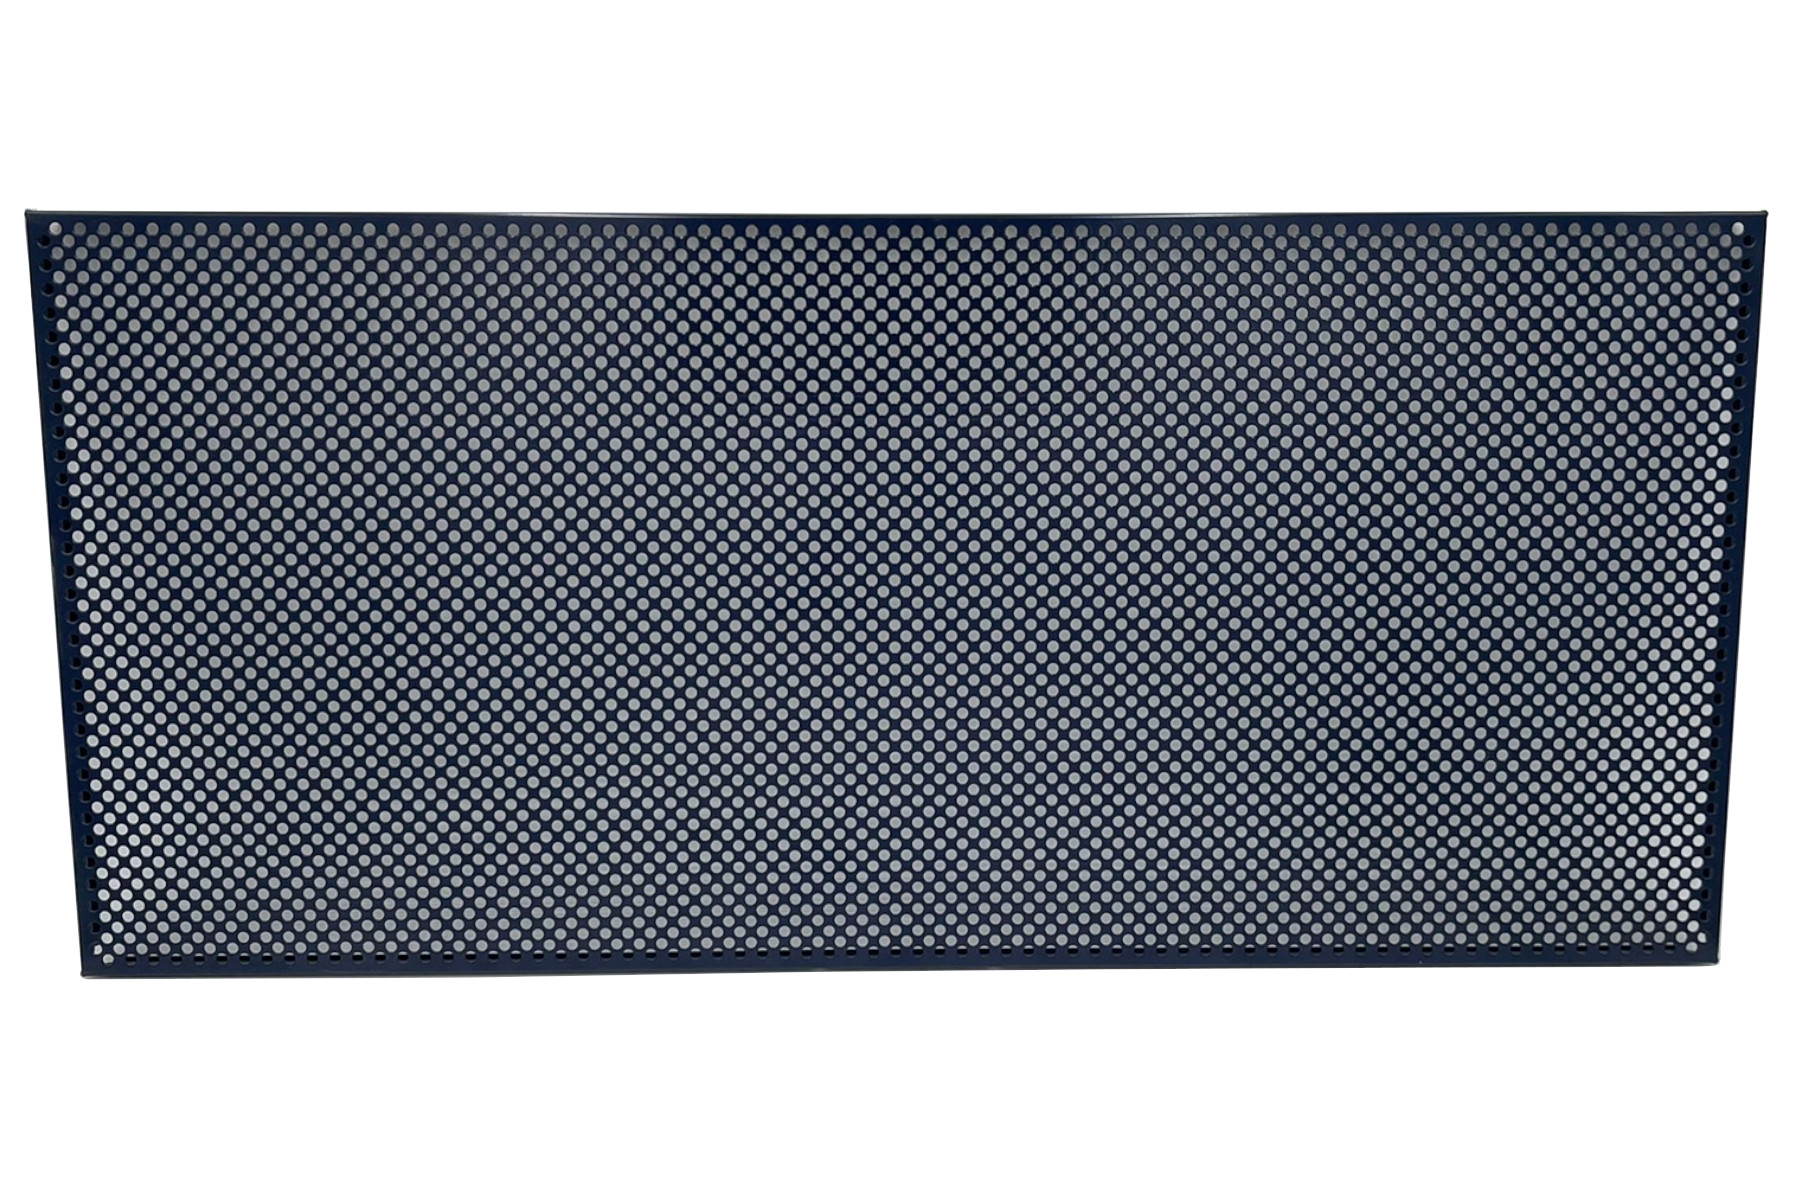 USM Haller Tablar 350x350, perforiert Stahlblau - Gebraucht - Größe wählbar